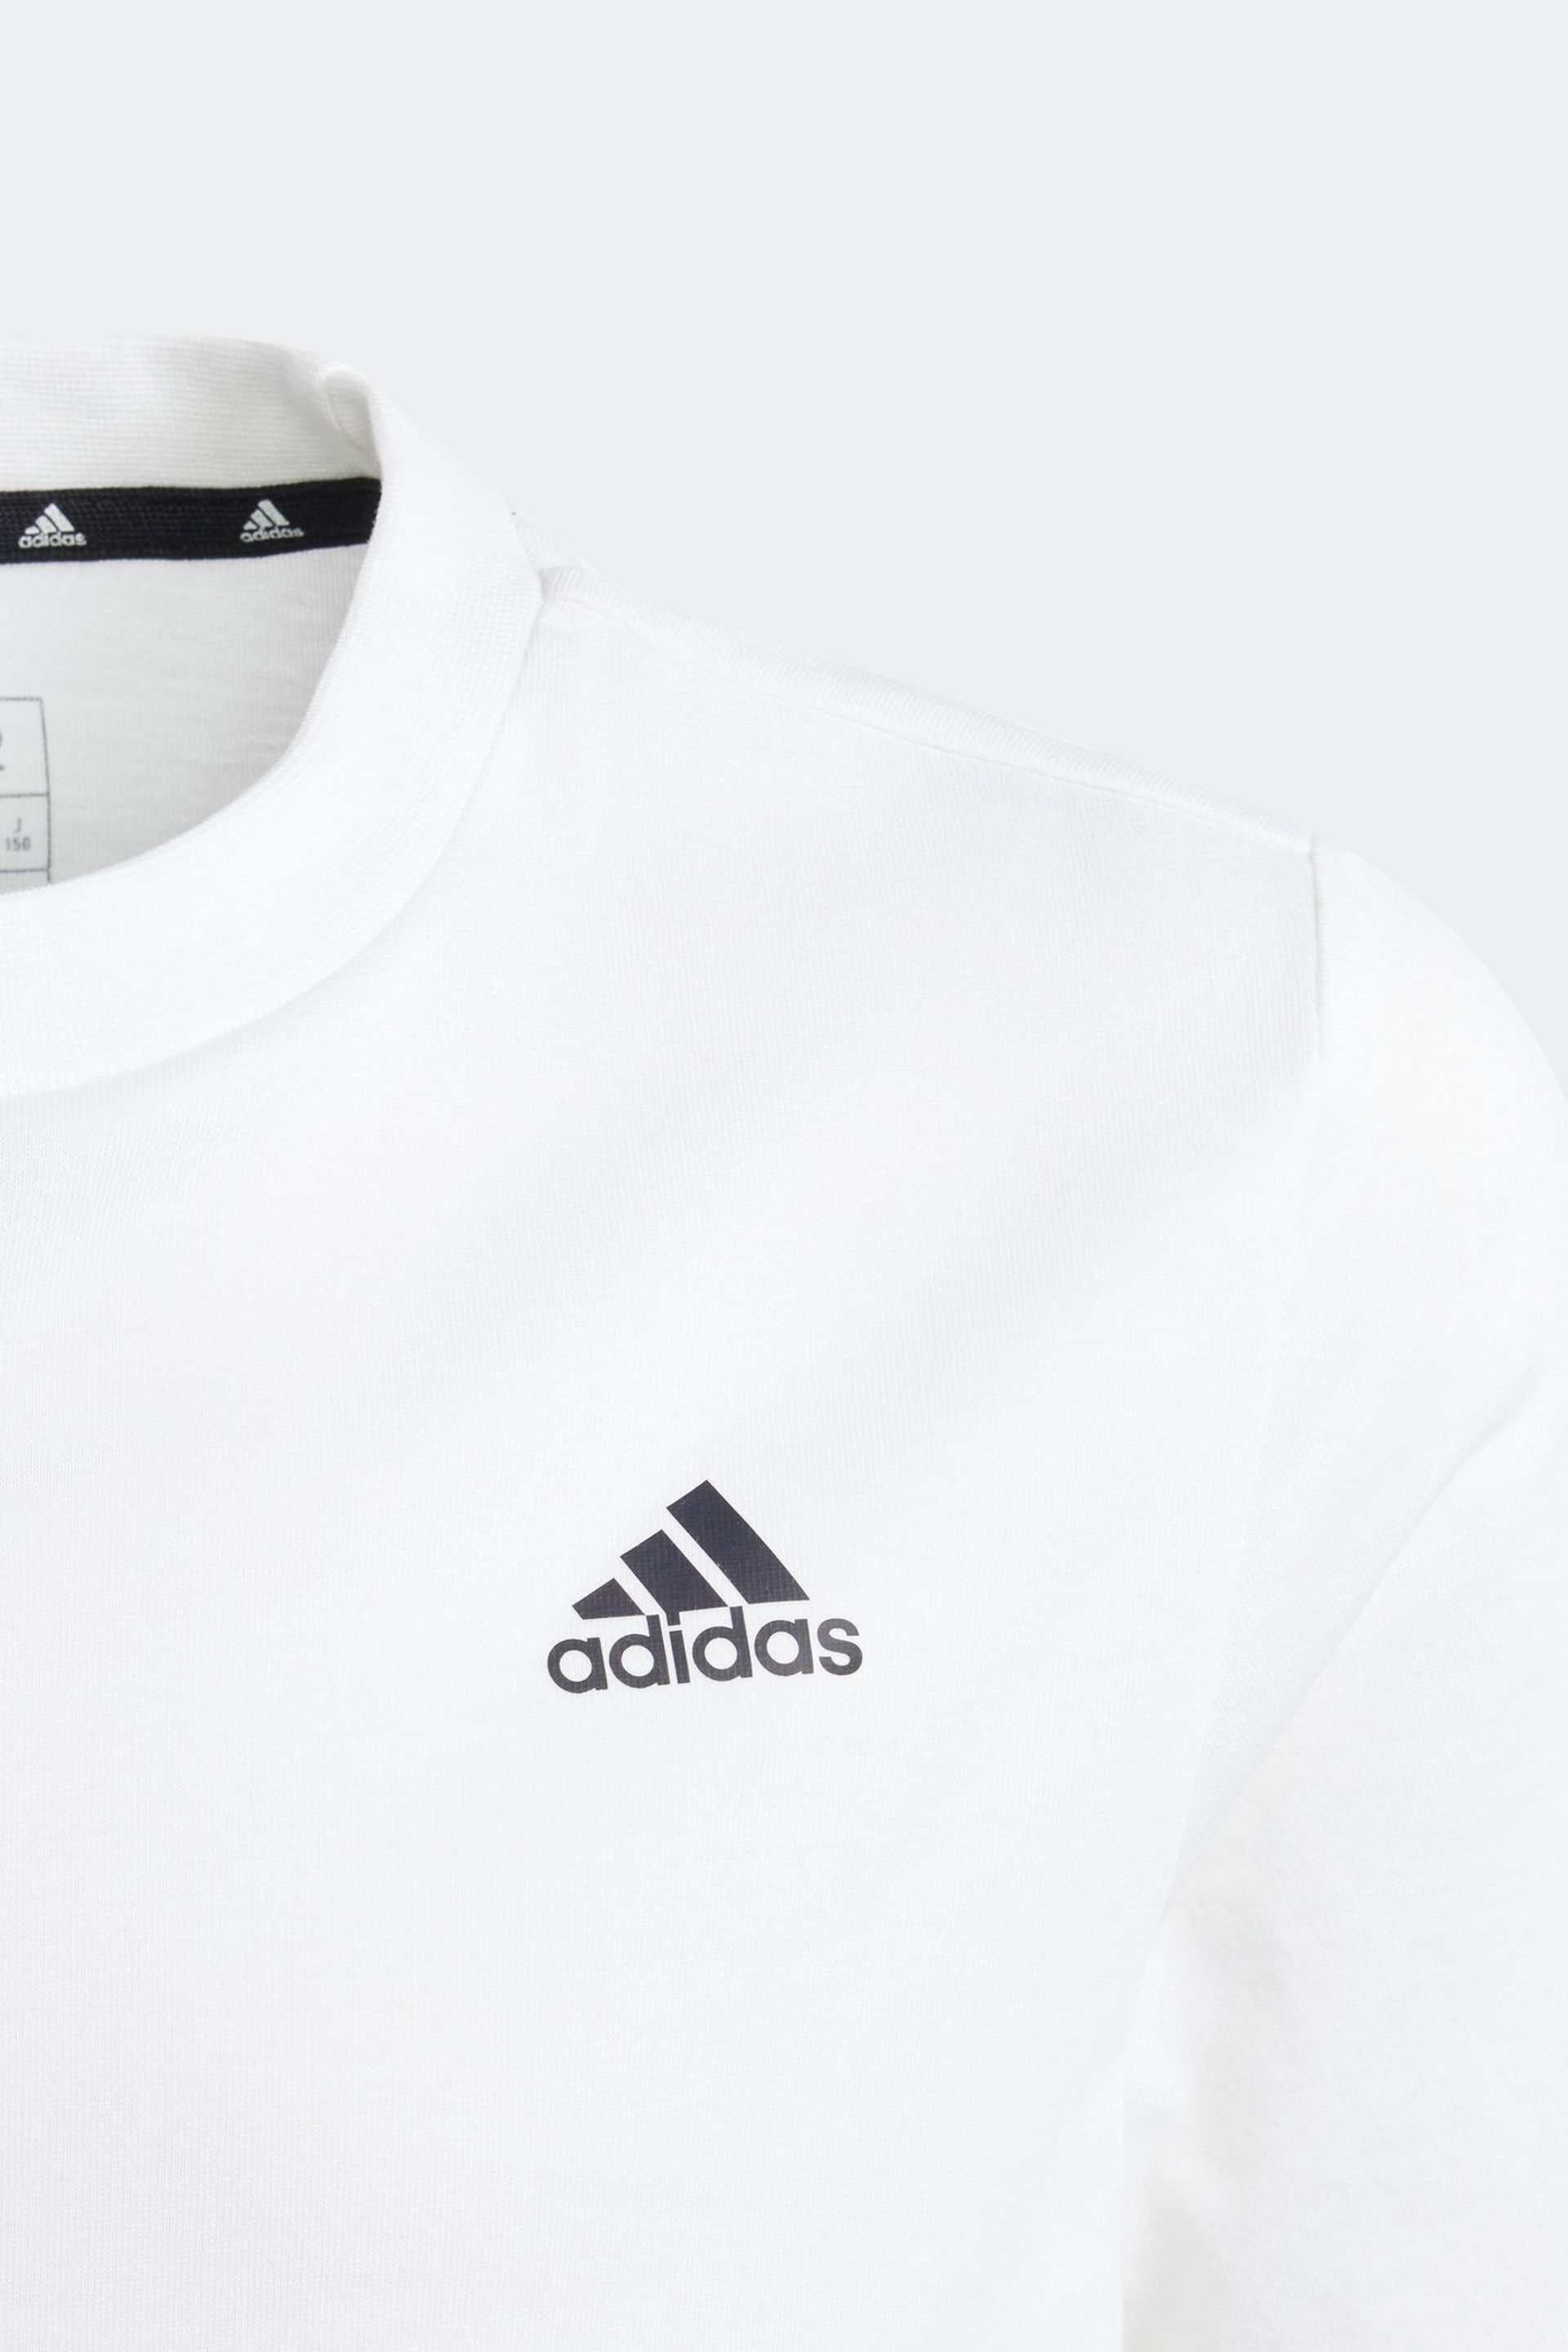 adidas White Sportswear Essentials Small Logo Cotton T-Shirt - Image 3 of 6